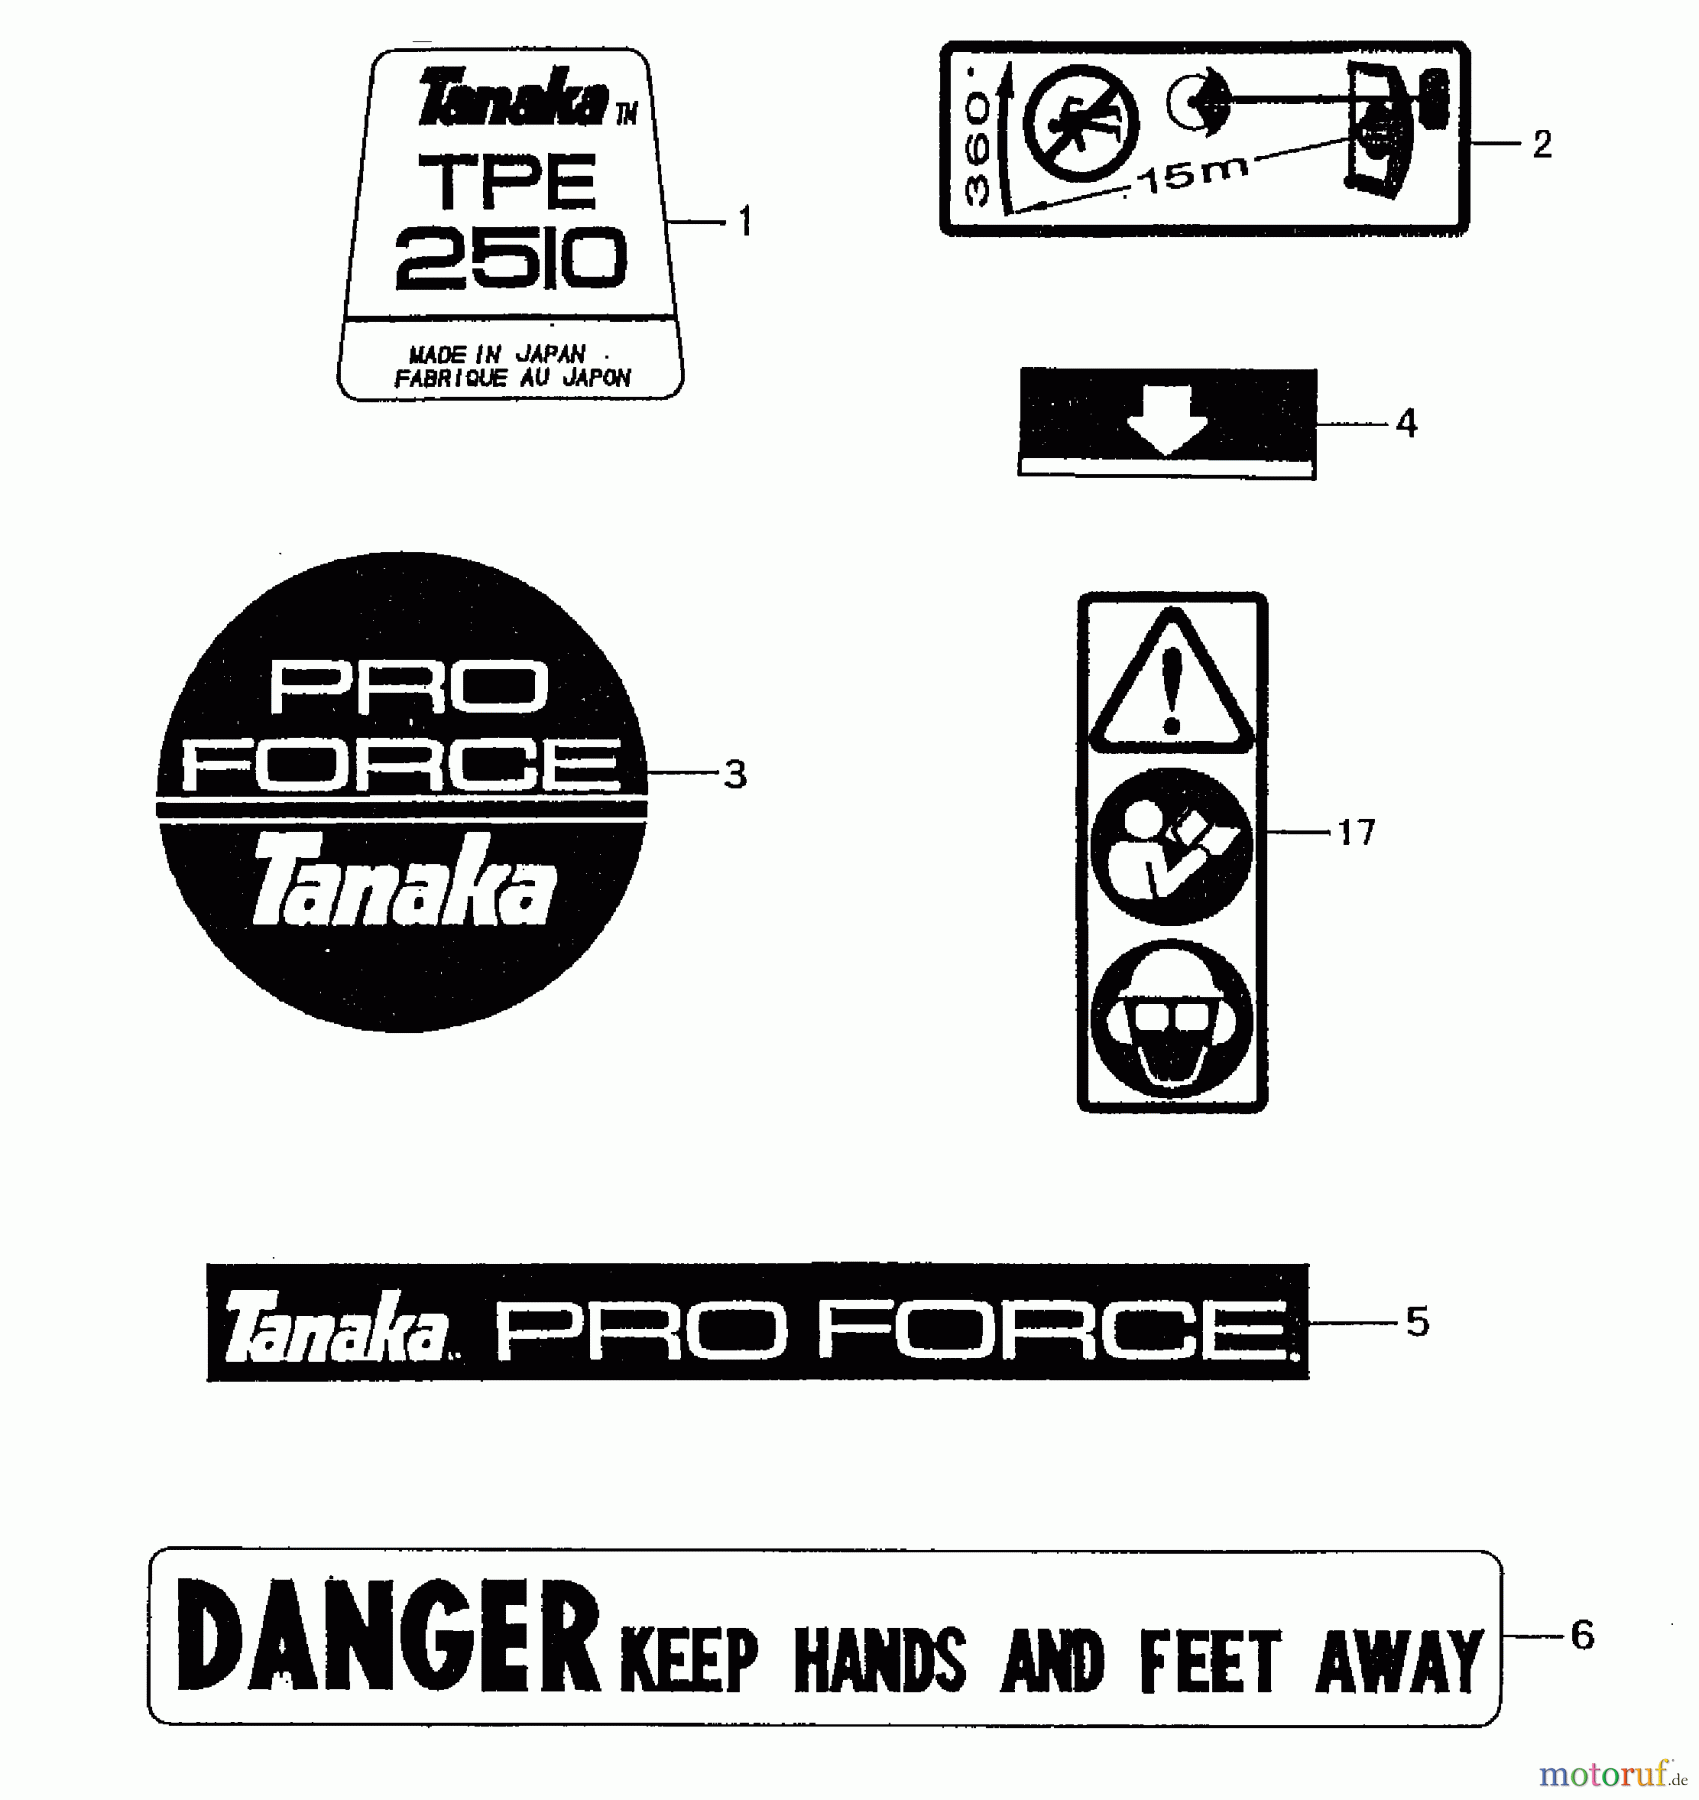  Tanaka Kantenschneider TPE-2510 - Tanaka Portable Edger Labels